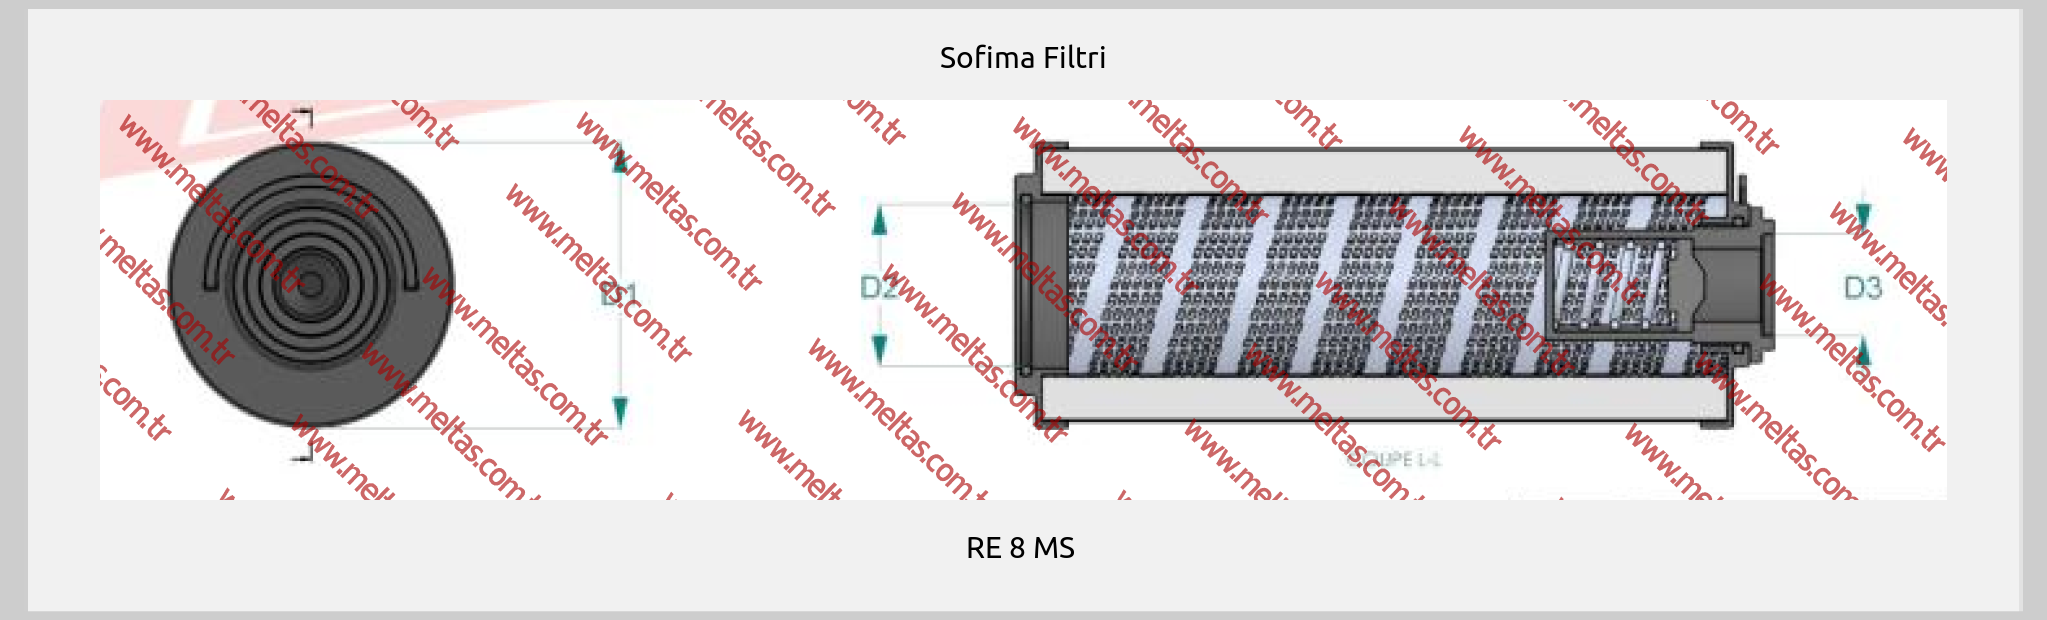 Sofima Filtri - RE 8 MS 